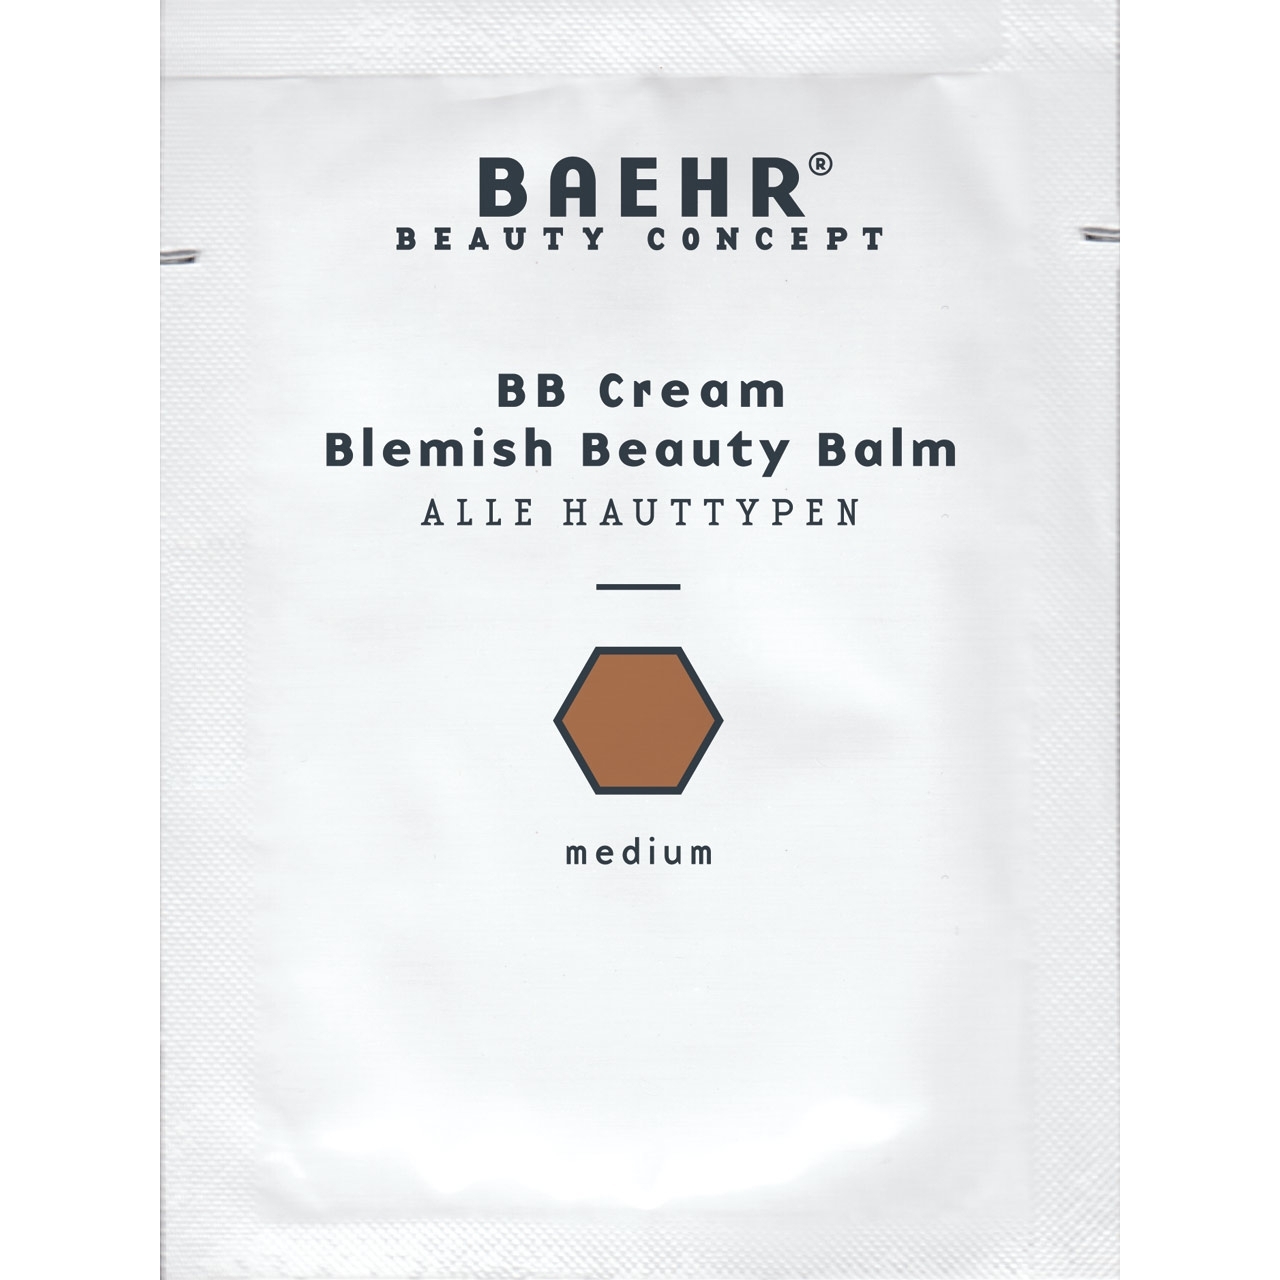 BAEHR BEAUTY CONCEPT - BB Cream medium Blemish Beauty Balm, Sachet 2 ml